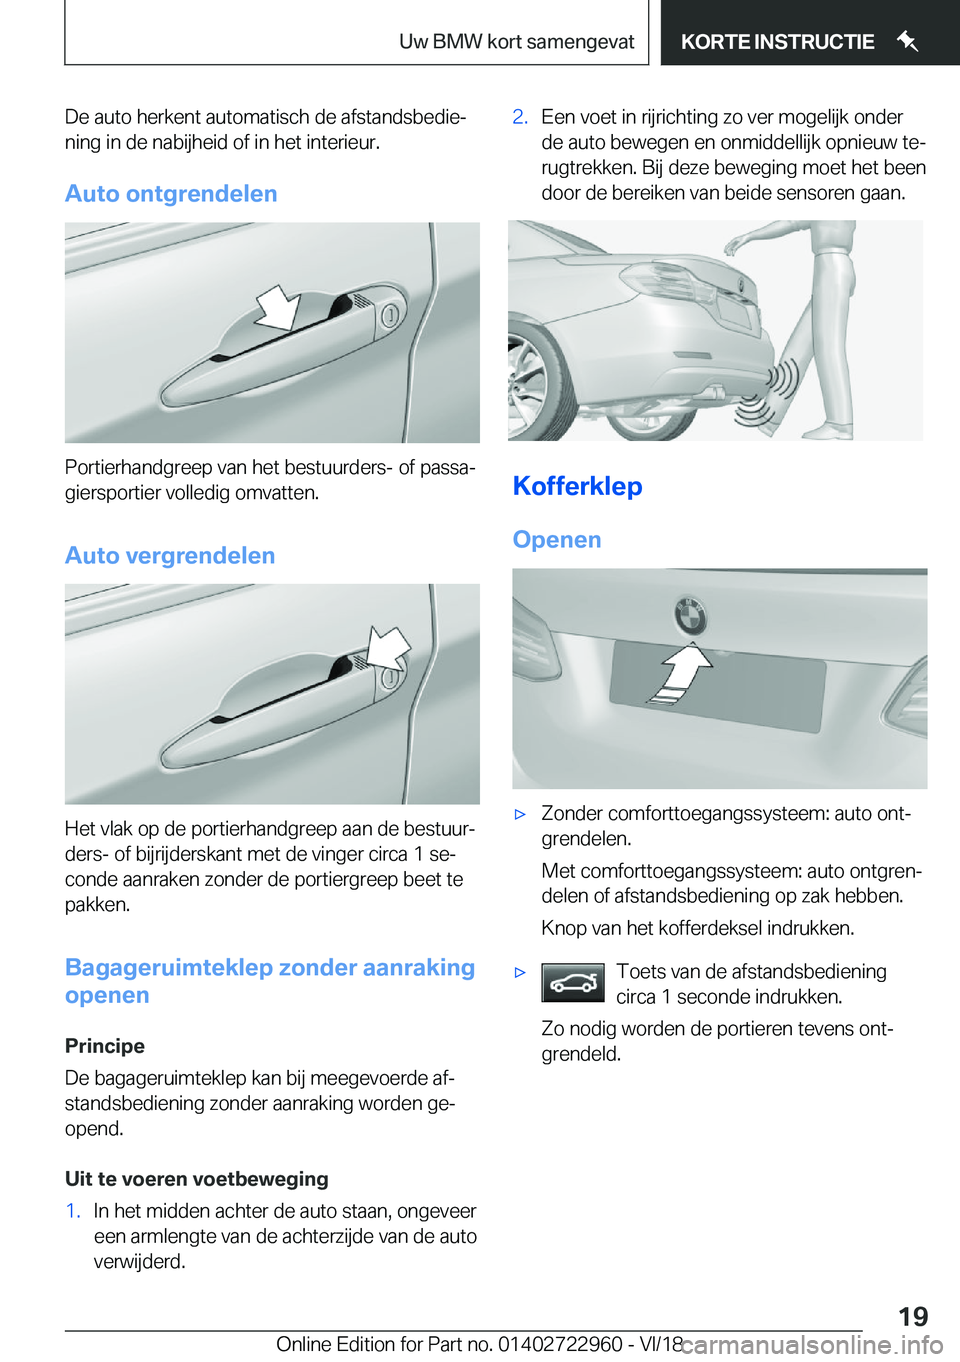 BMW M4 2019  Instructieboekjes (in Dutch) �D�e��a�u�t�o��h�e�r�k�e�n�t��a�u�t�o�m�a�t�i�s�c�h��d�e��a�f�s�t�a�n�d�s�b�e�d�i�ej�n�i�n�g��i�n��d�e��n�a�b�i�j�h�e�i�d��o�f��i�n��h�e�t��i�n�t�e�r�i�e�u�r�.
�A�u�t�o��o�n�t�g�r�e�n�d�